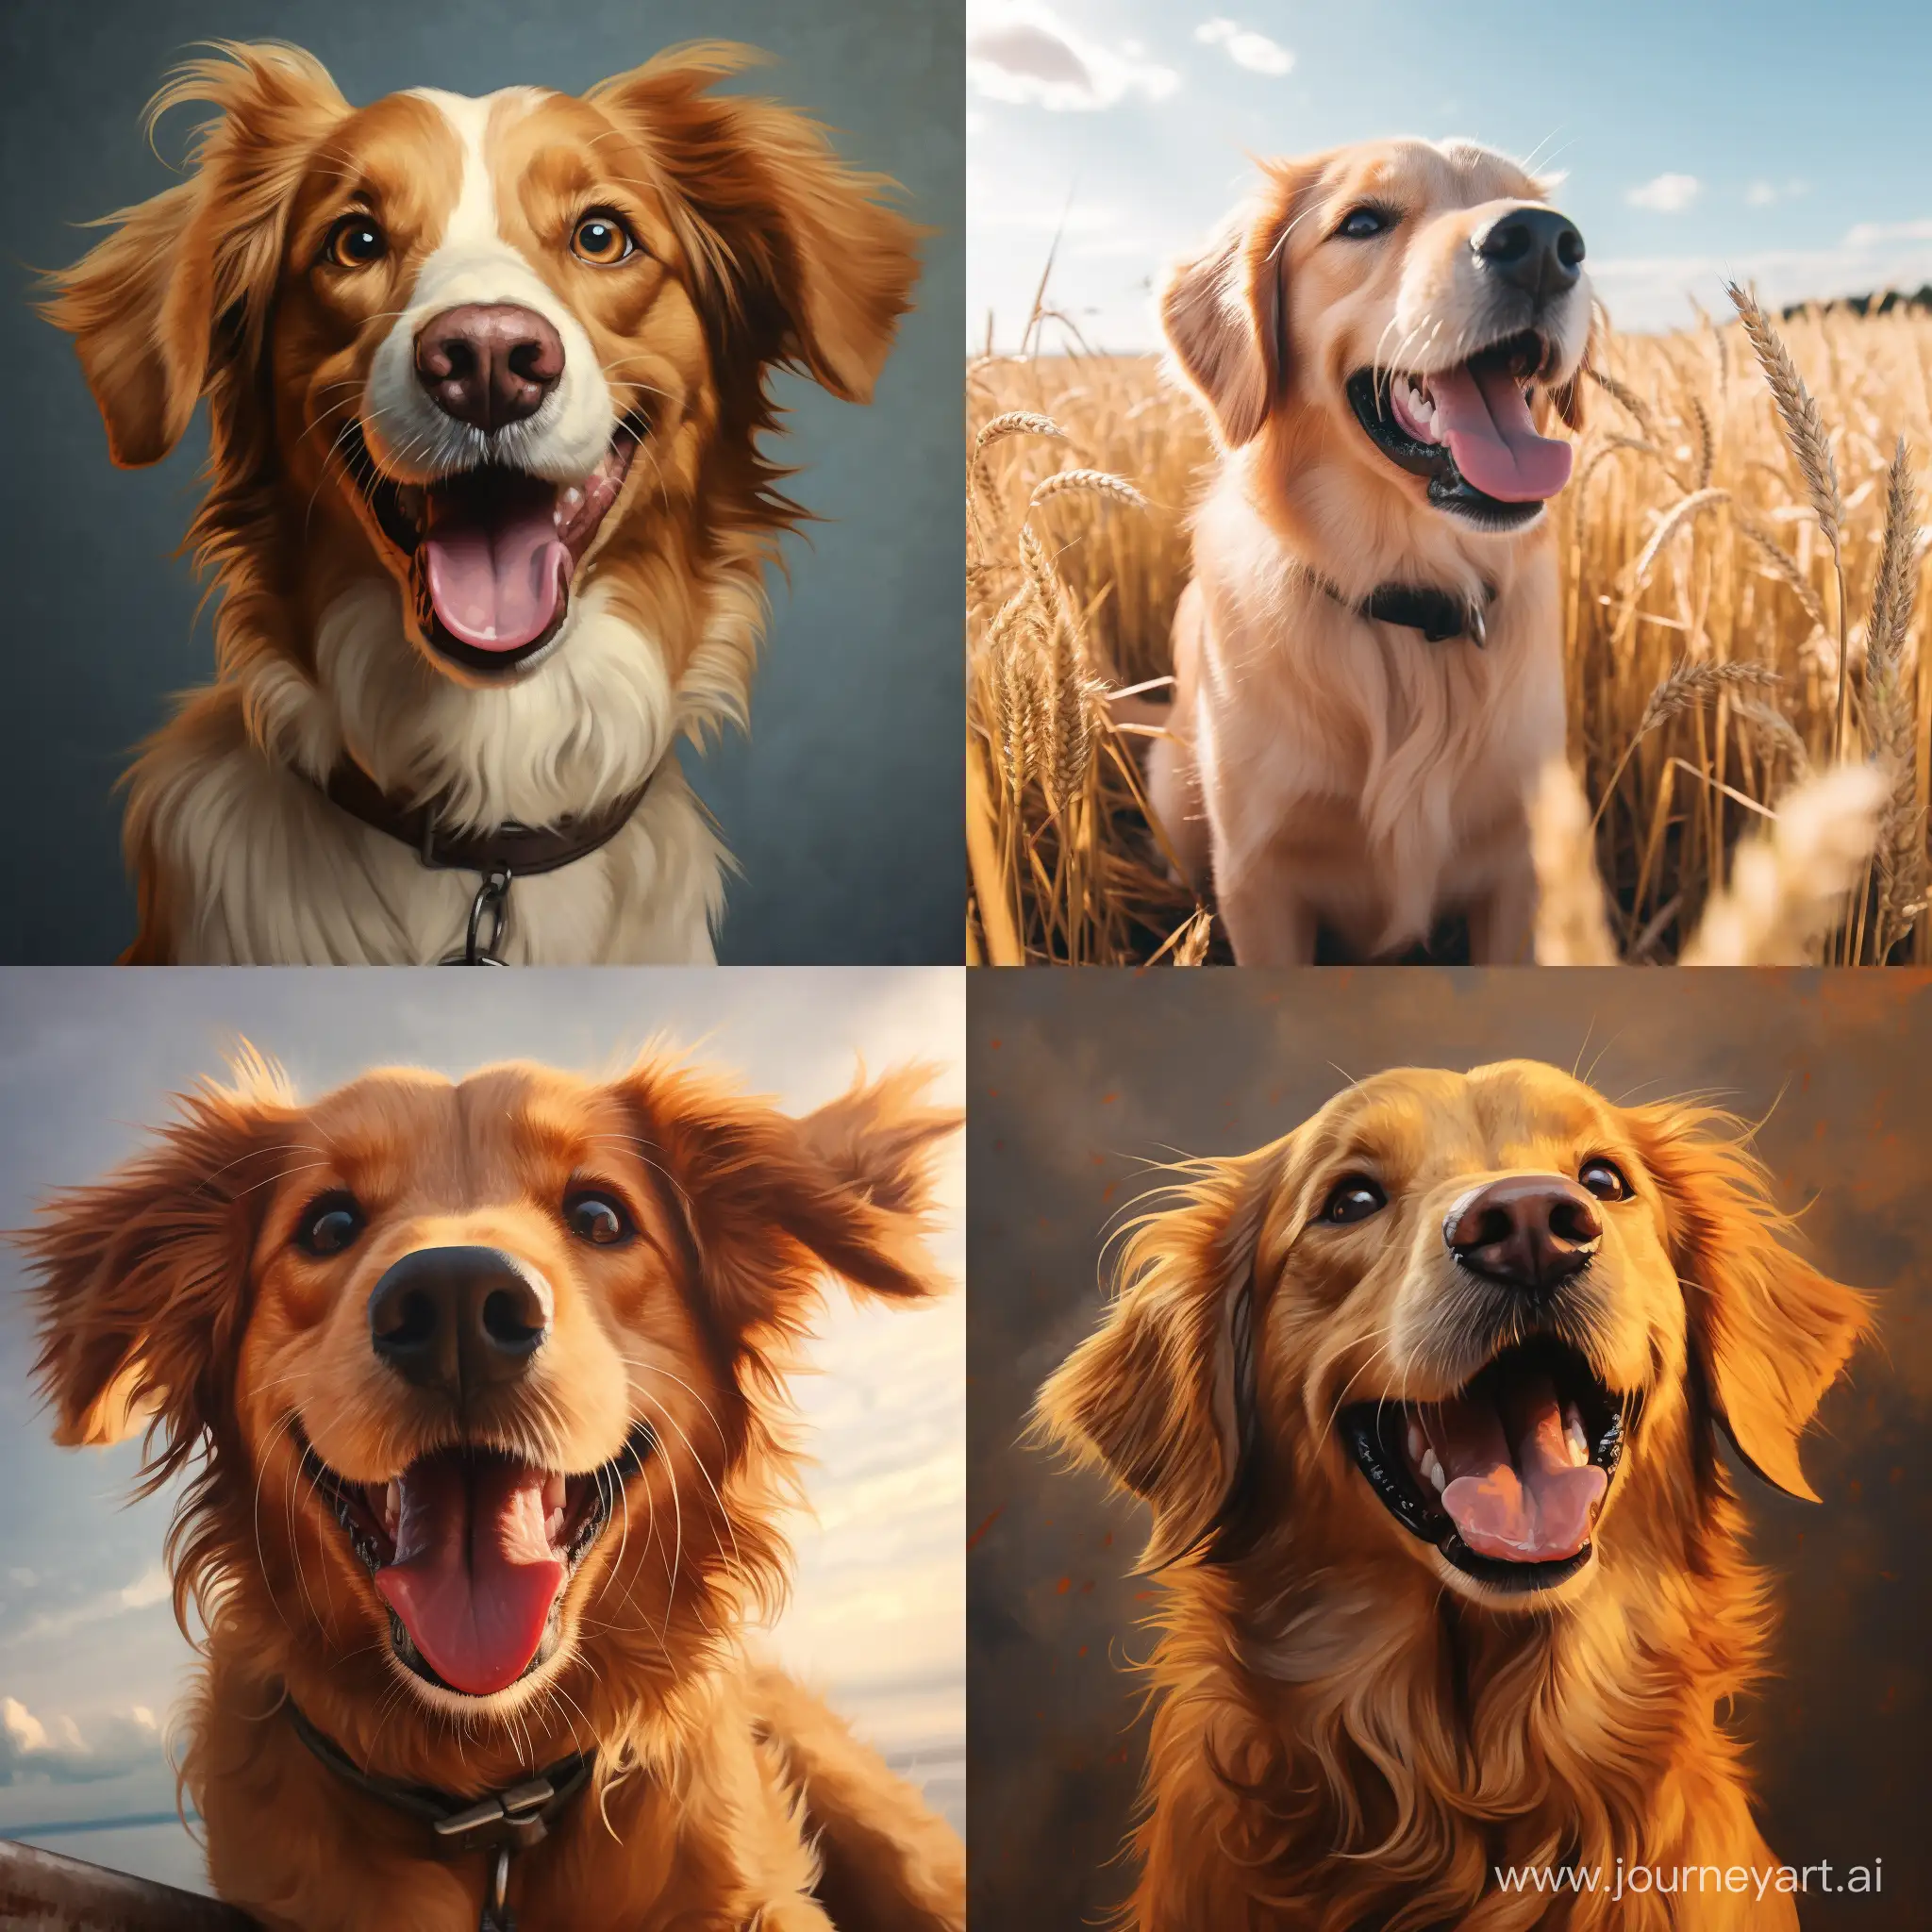 Joyful-Canine-Companion-in-a-Square-Frame